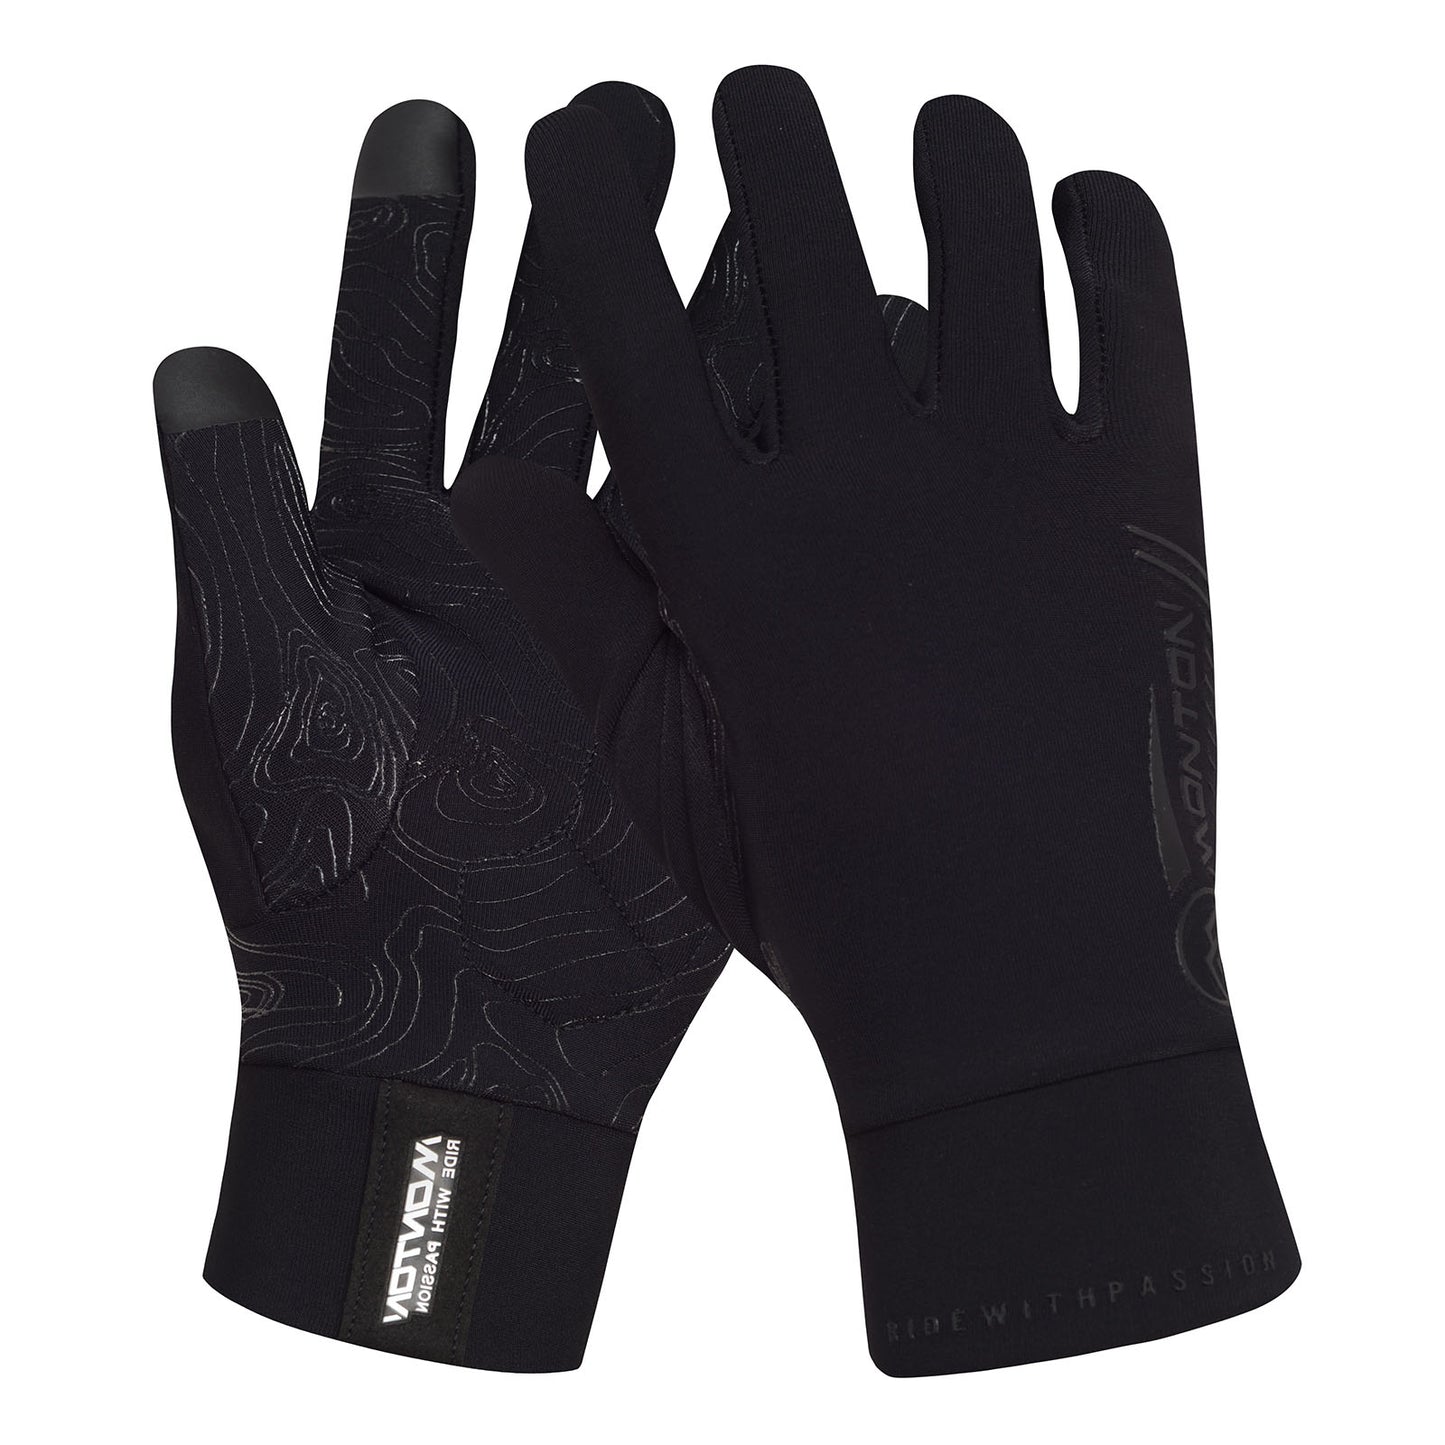 Women's Startu - Thermal Cycling/Running Gloves